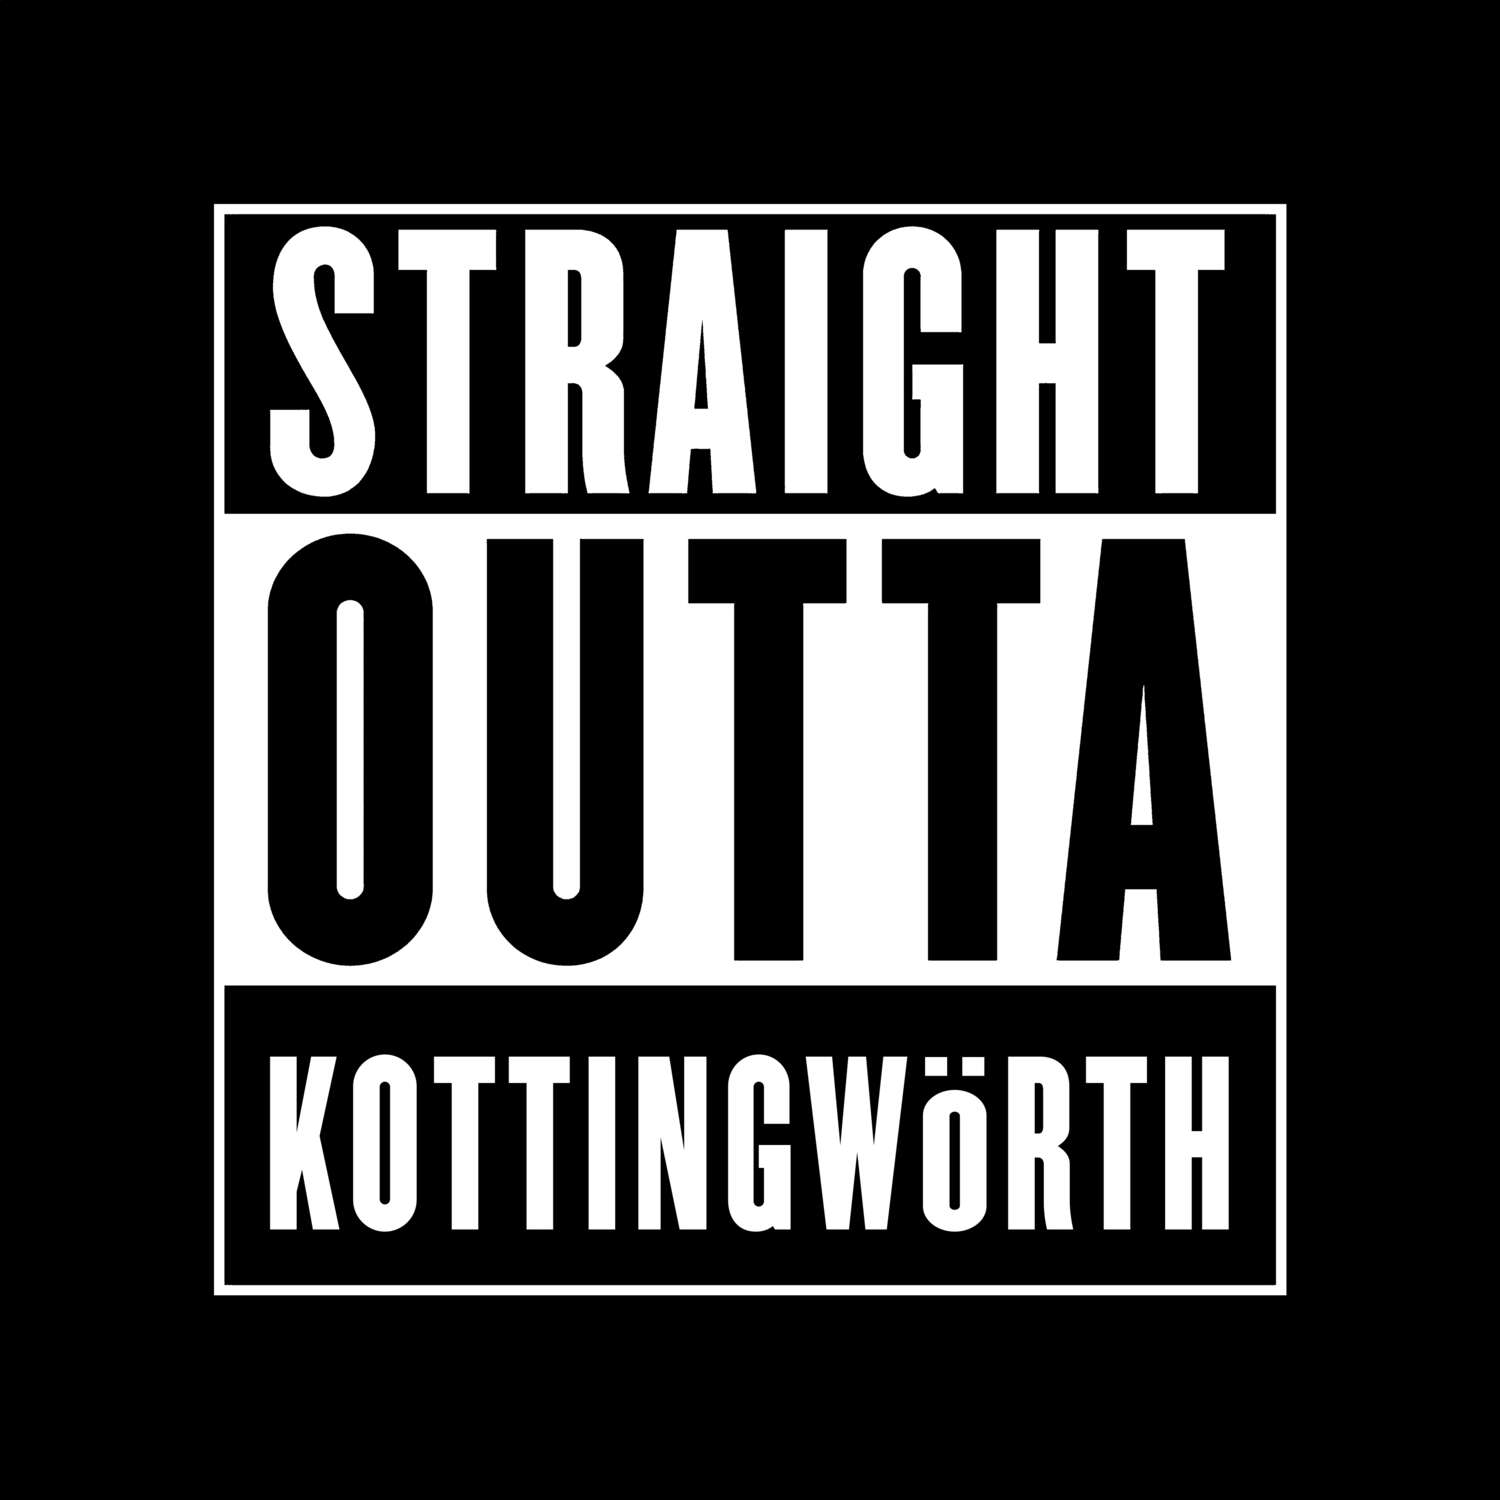 Kottingwörth T-Shirt »Straight Outta«